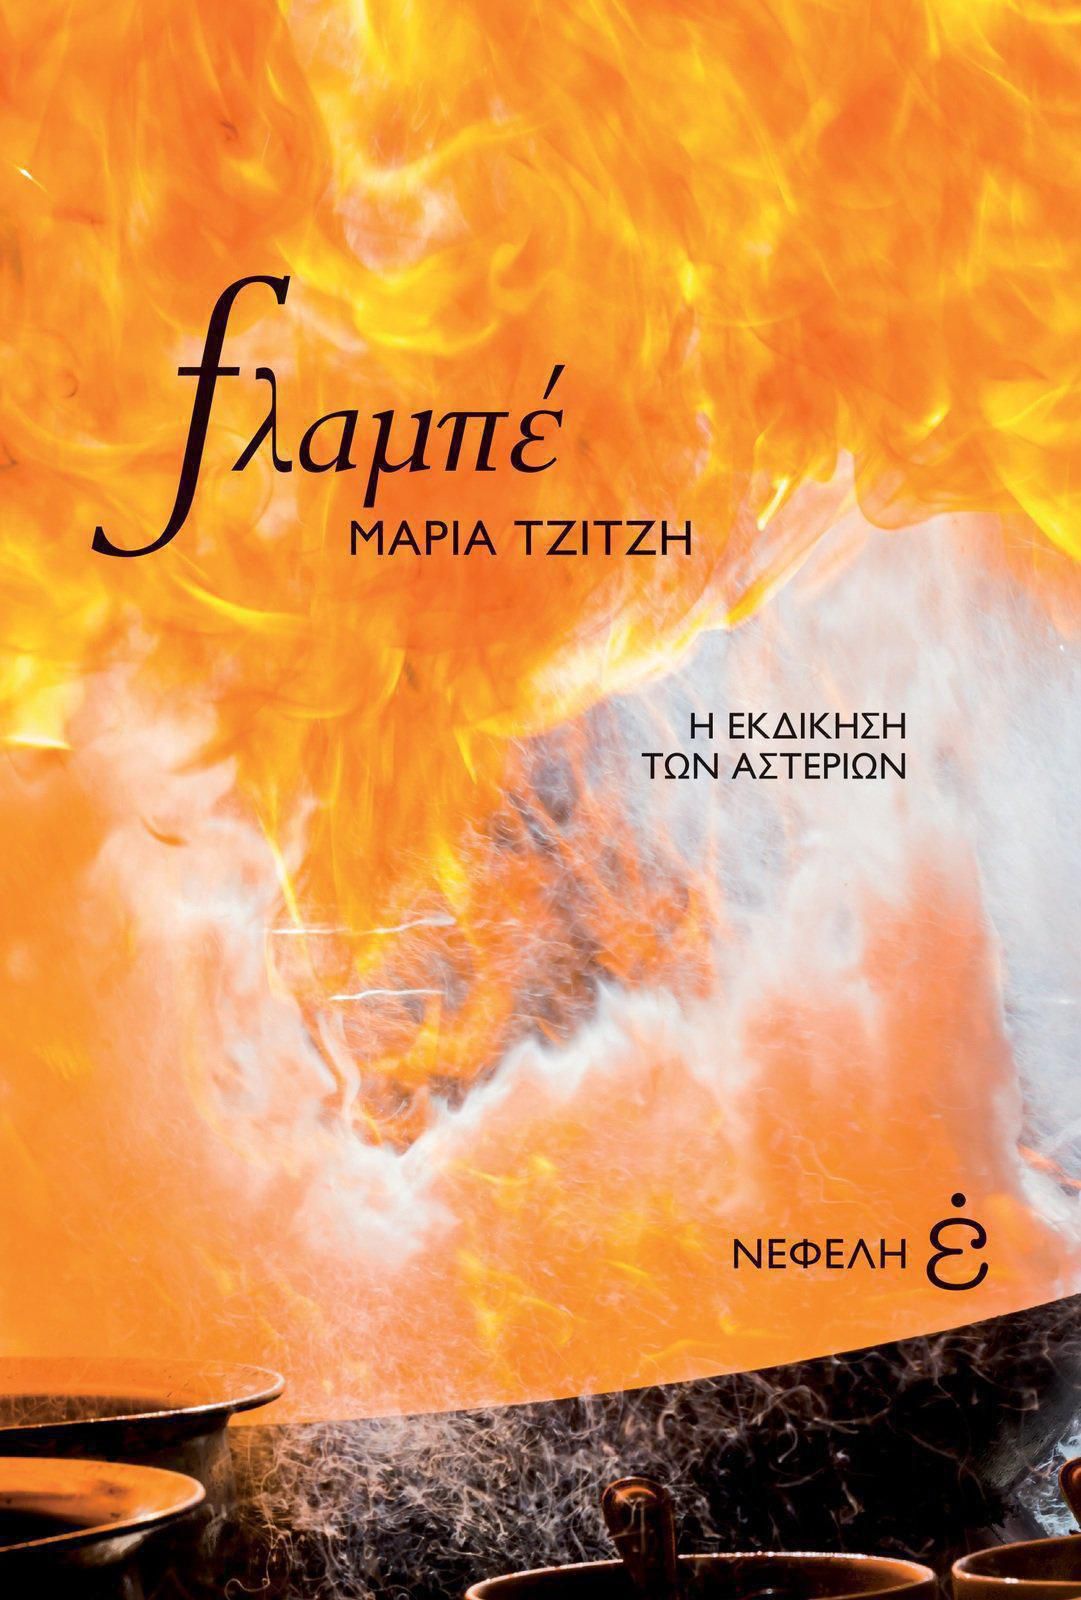 flambe book cover